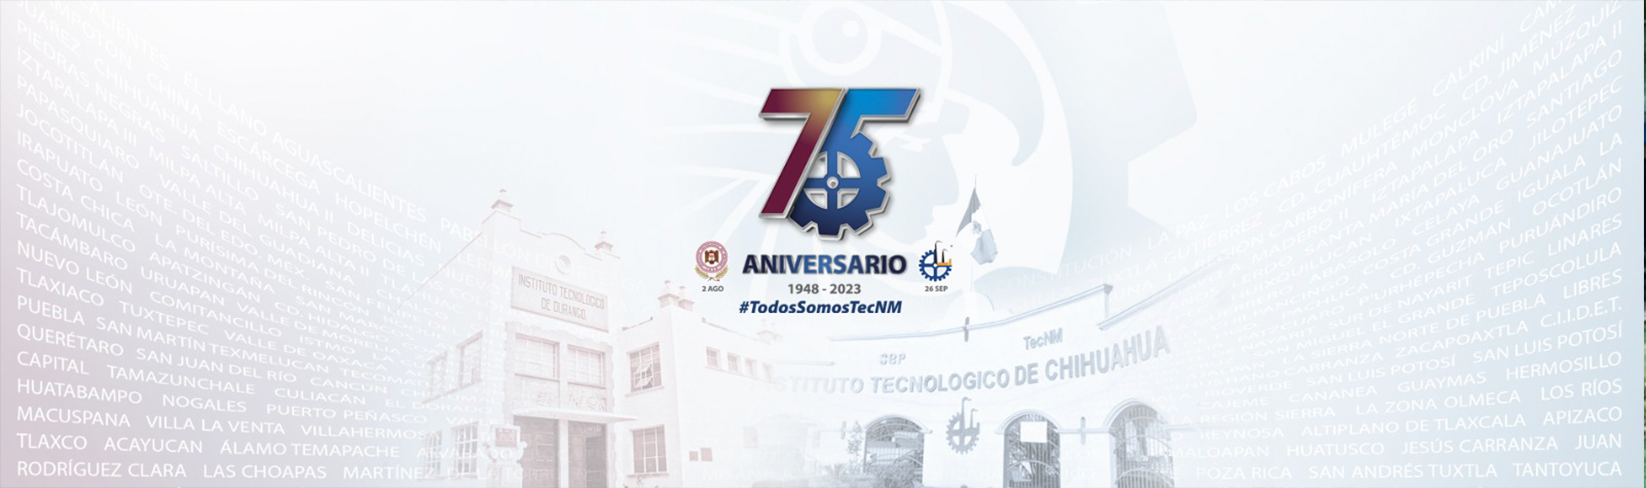 75 Aniversario TECNM